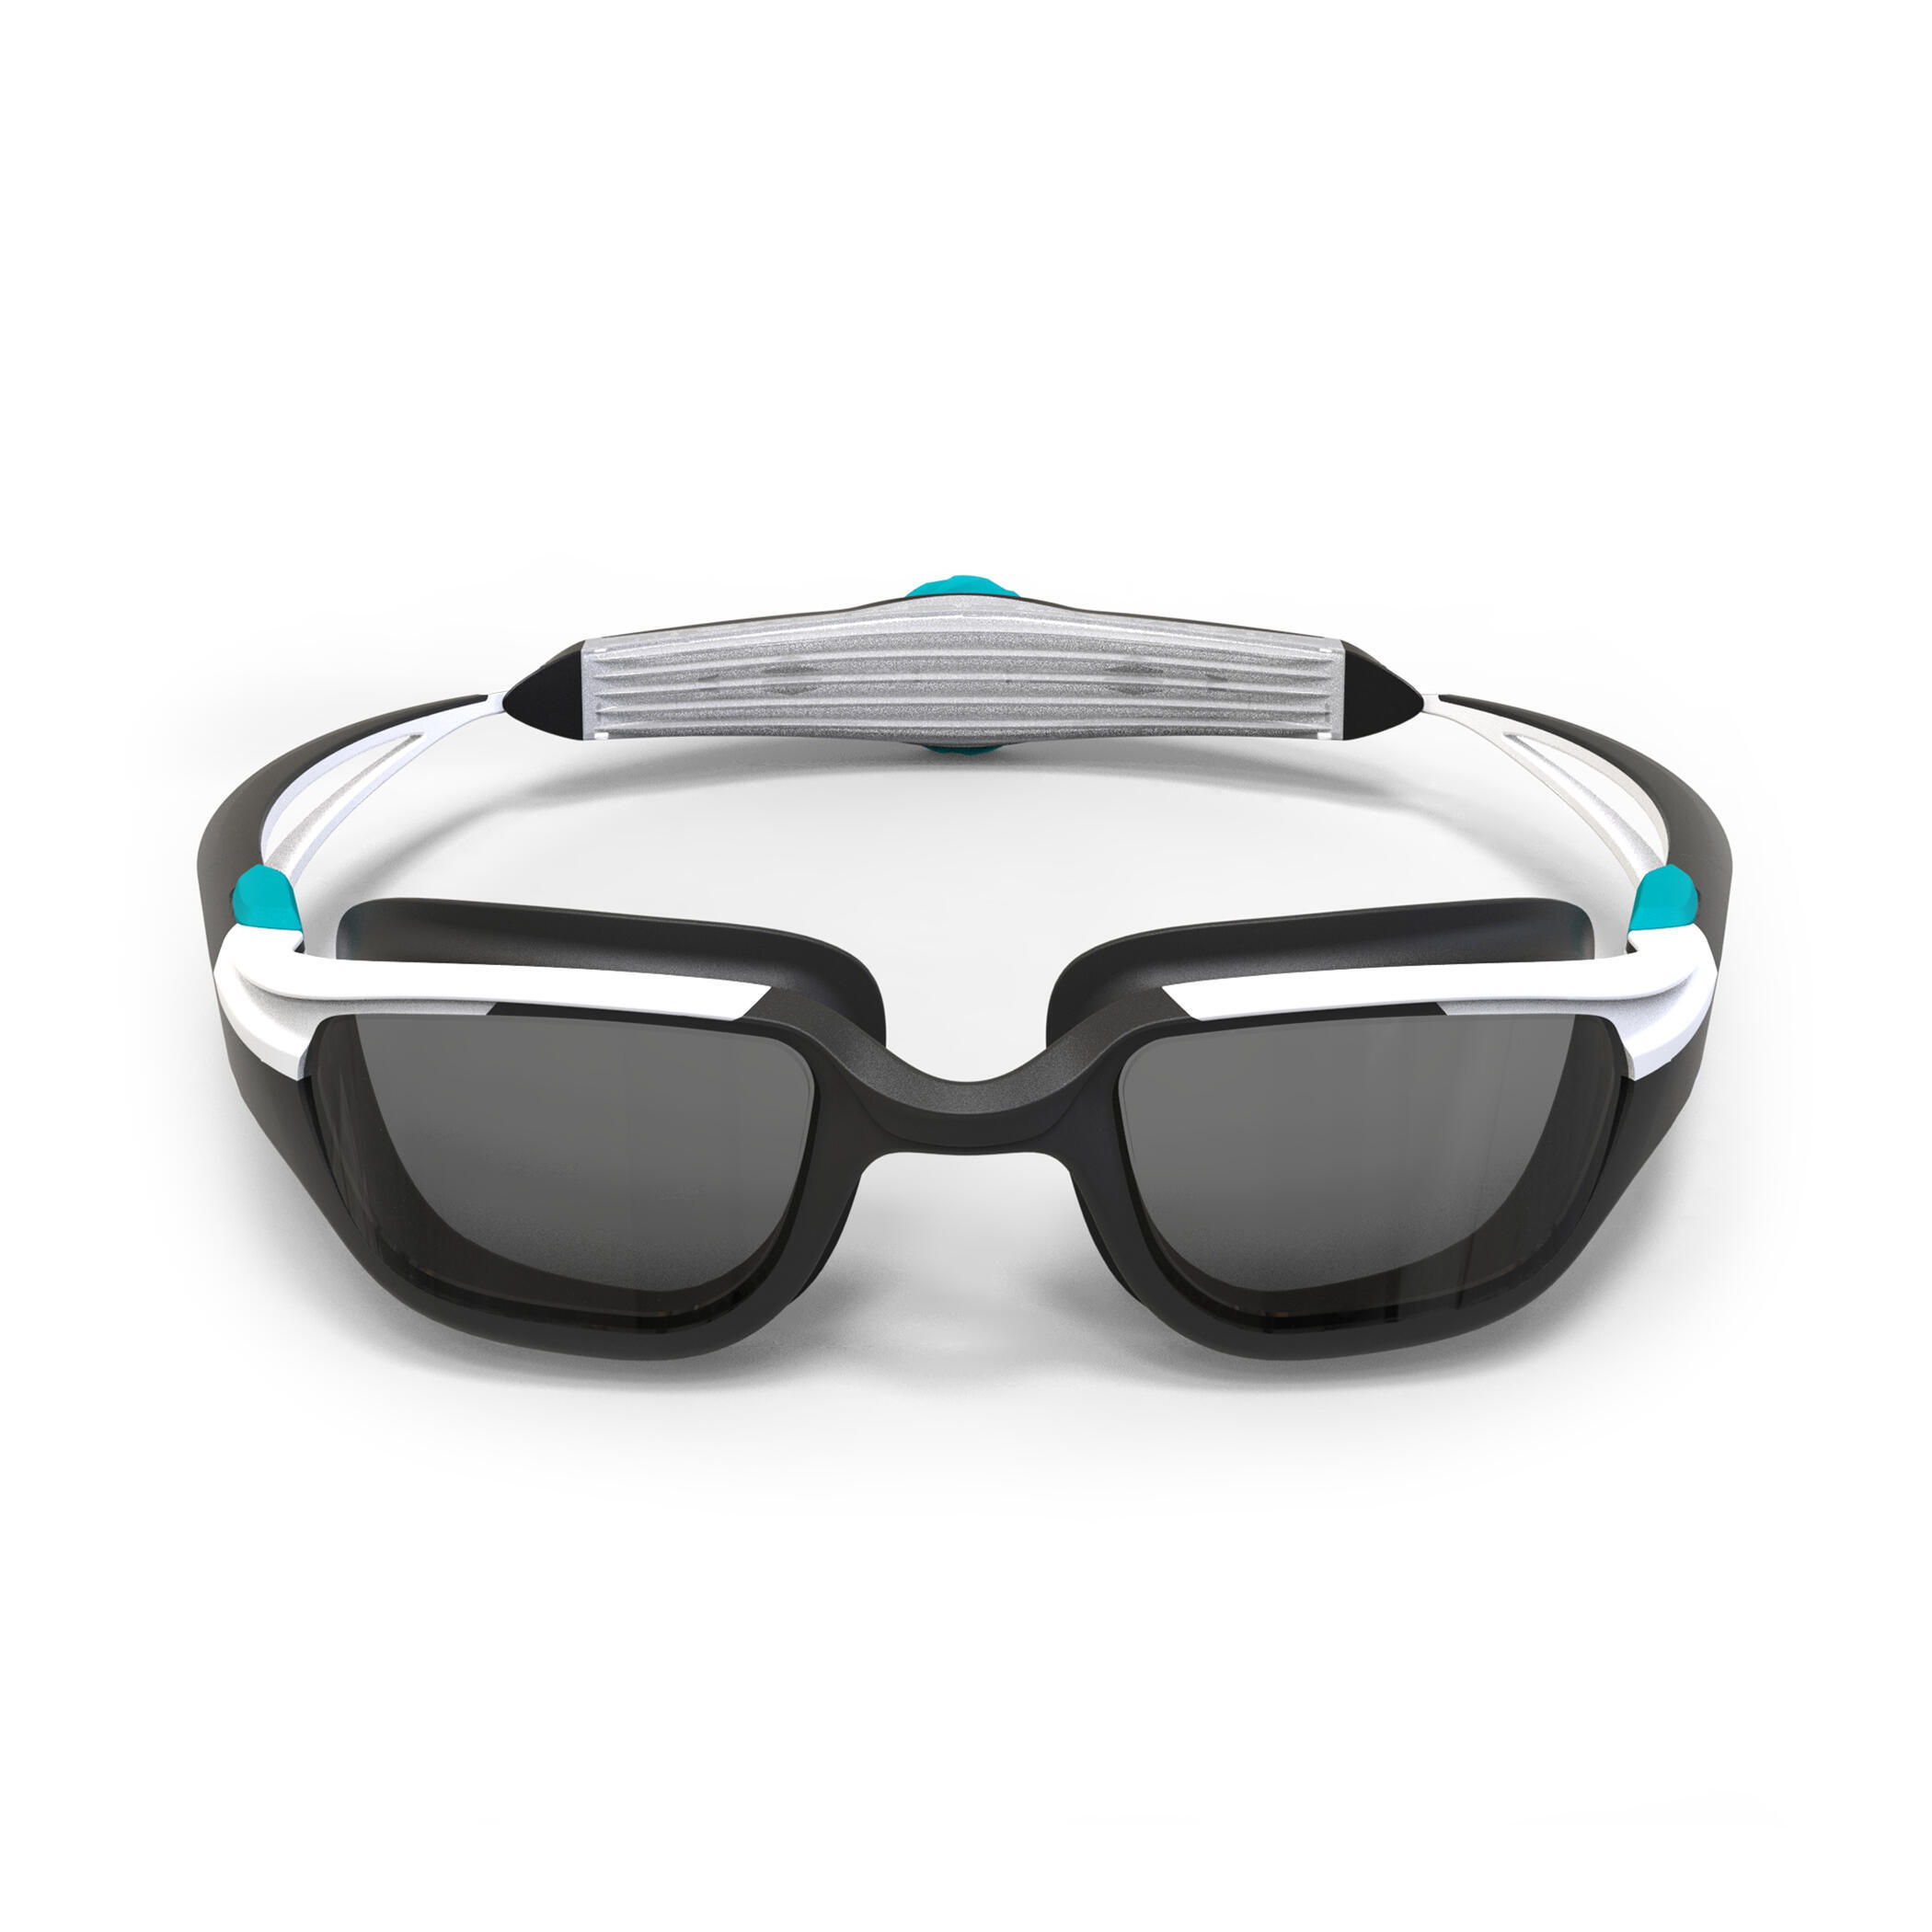 Swimming goggles - TURN Size S - Smoked Lenses - White/Black/Turquoise 3/7